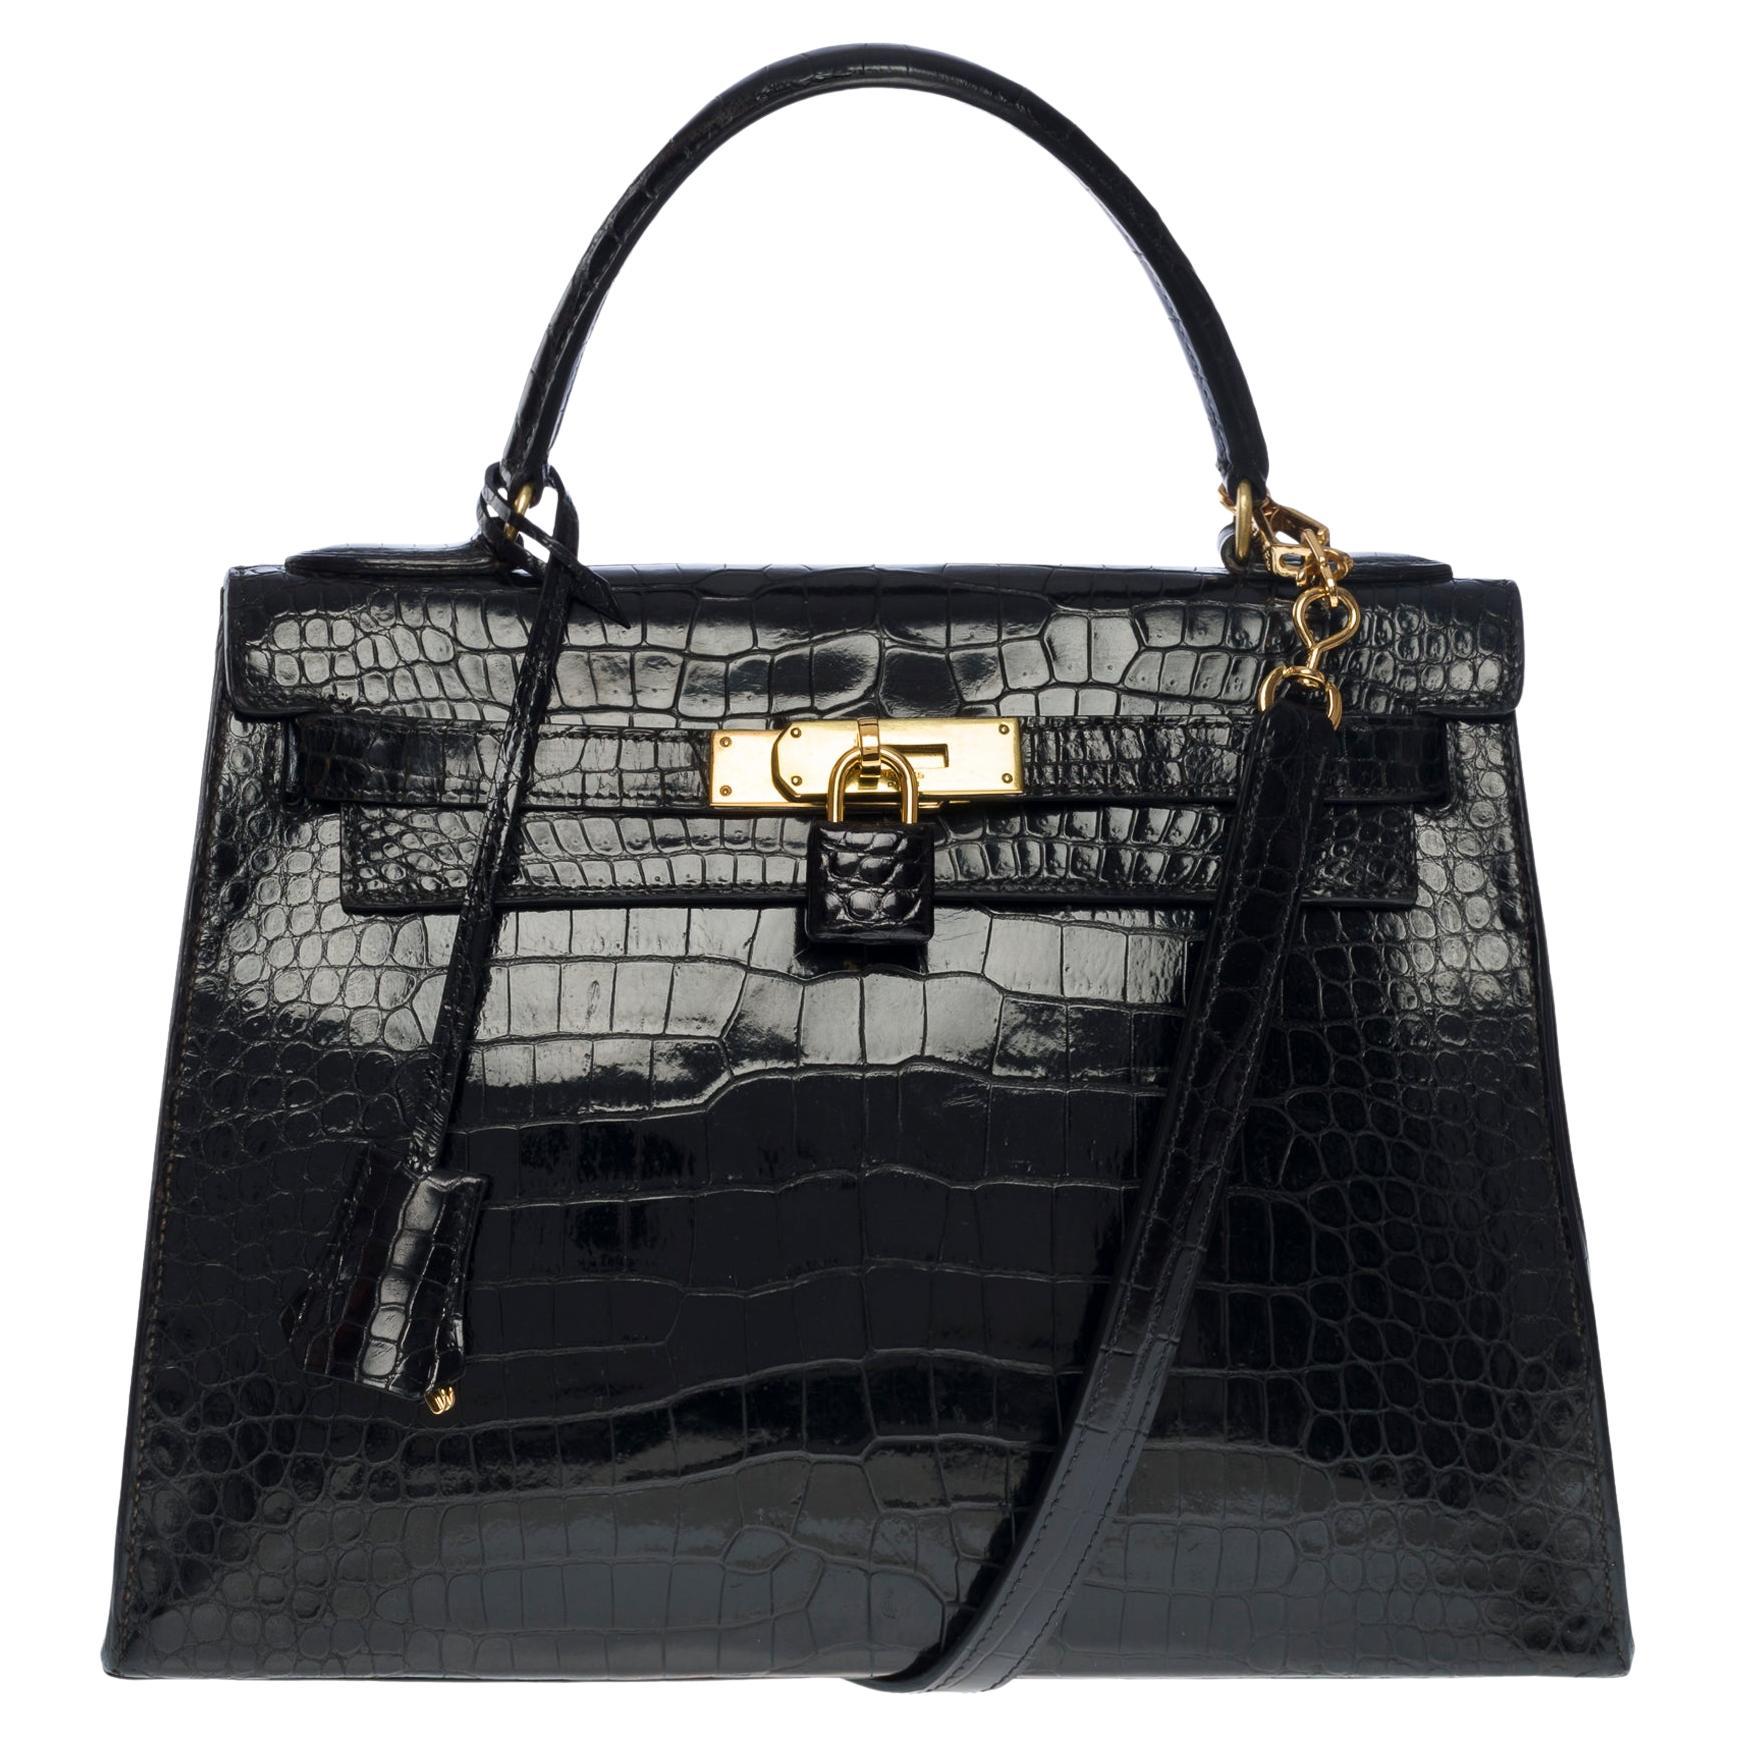 Amazing Hermes Kelly 28 sellier handbag strap in black Crocodile Porosus, GHW